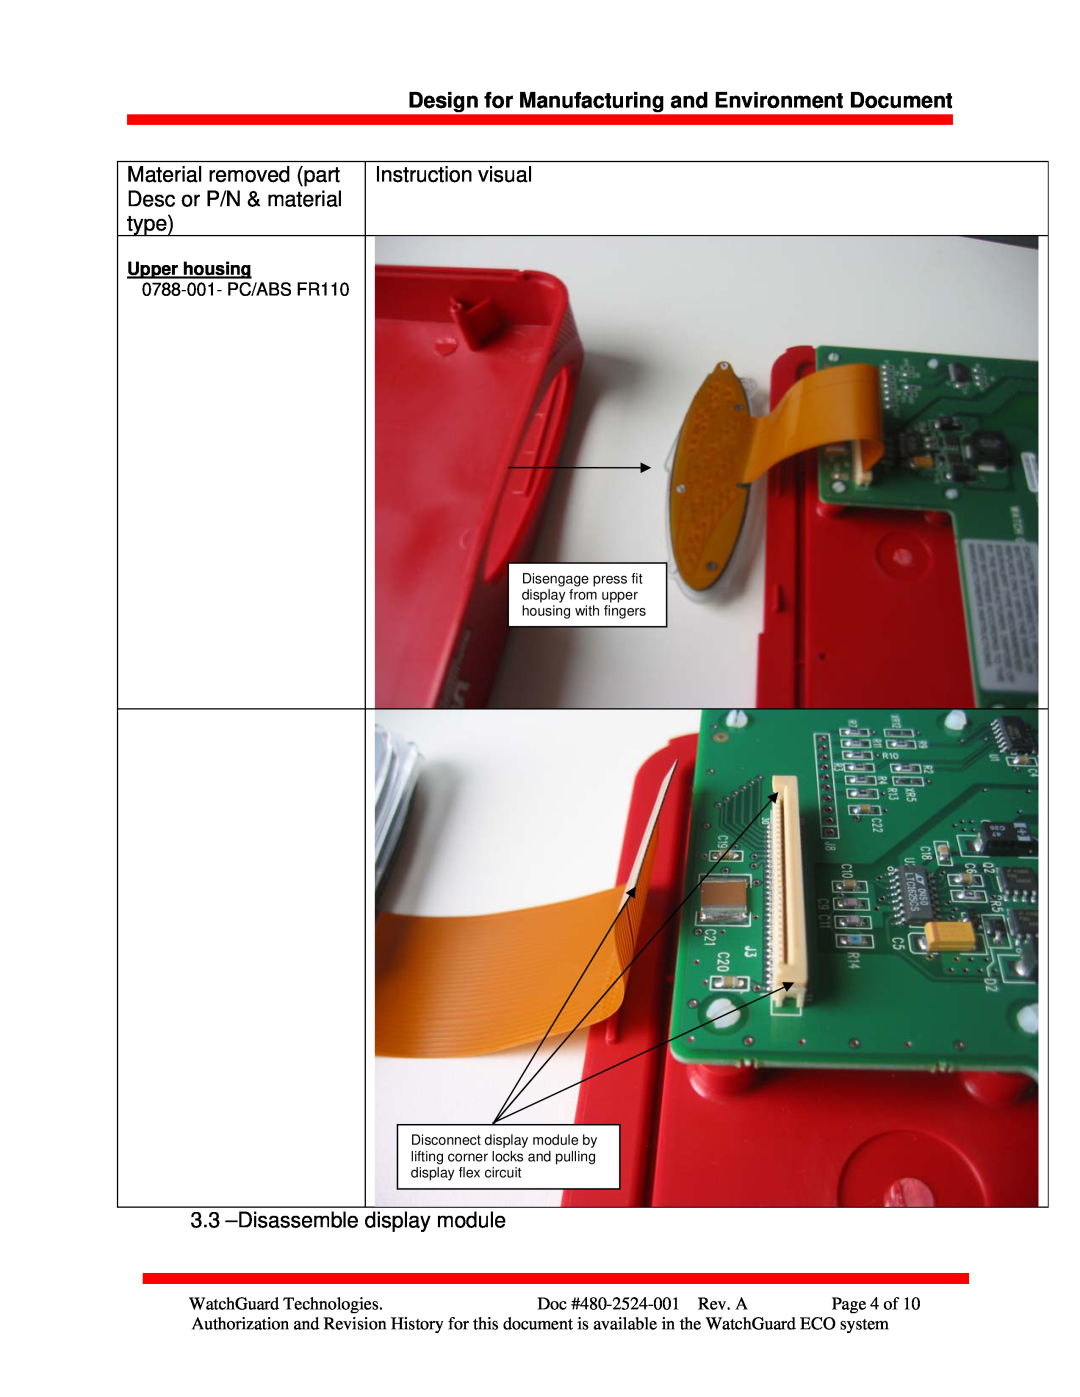 WatchGuard Technologies 480-2524-001 manual Disassemble display module, Upper housing, Instruction visual 